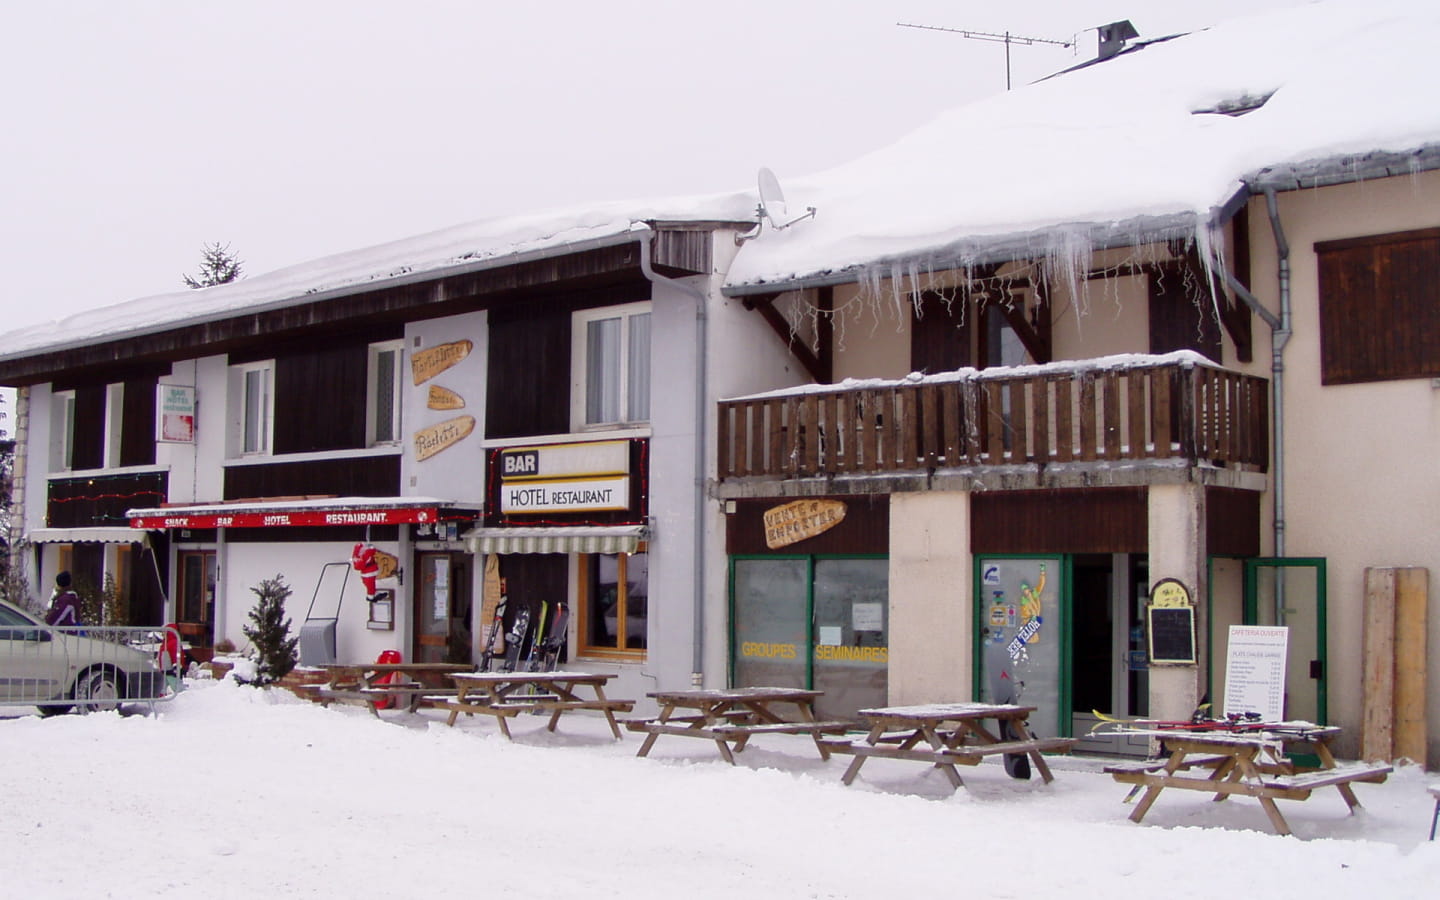 Hôtel-restaurant Berthet